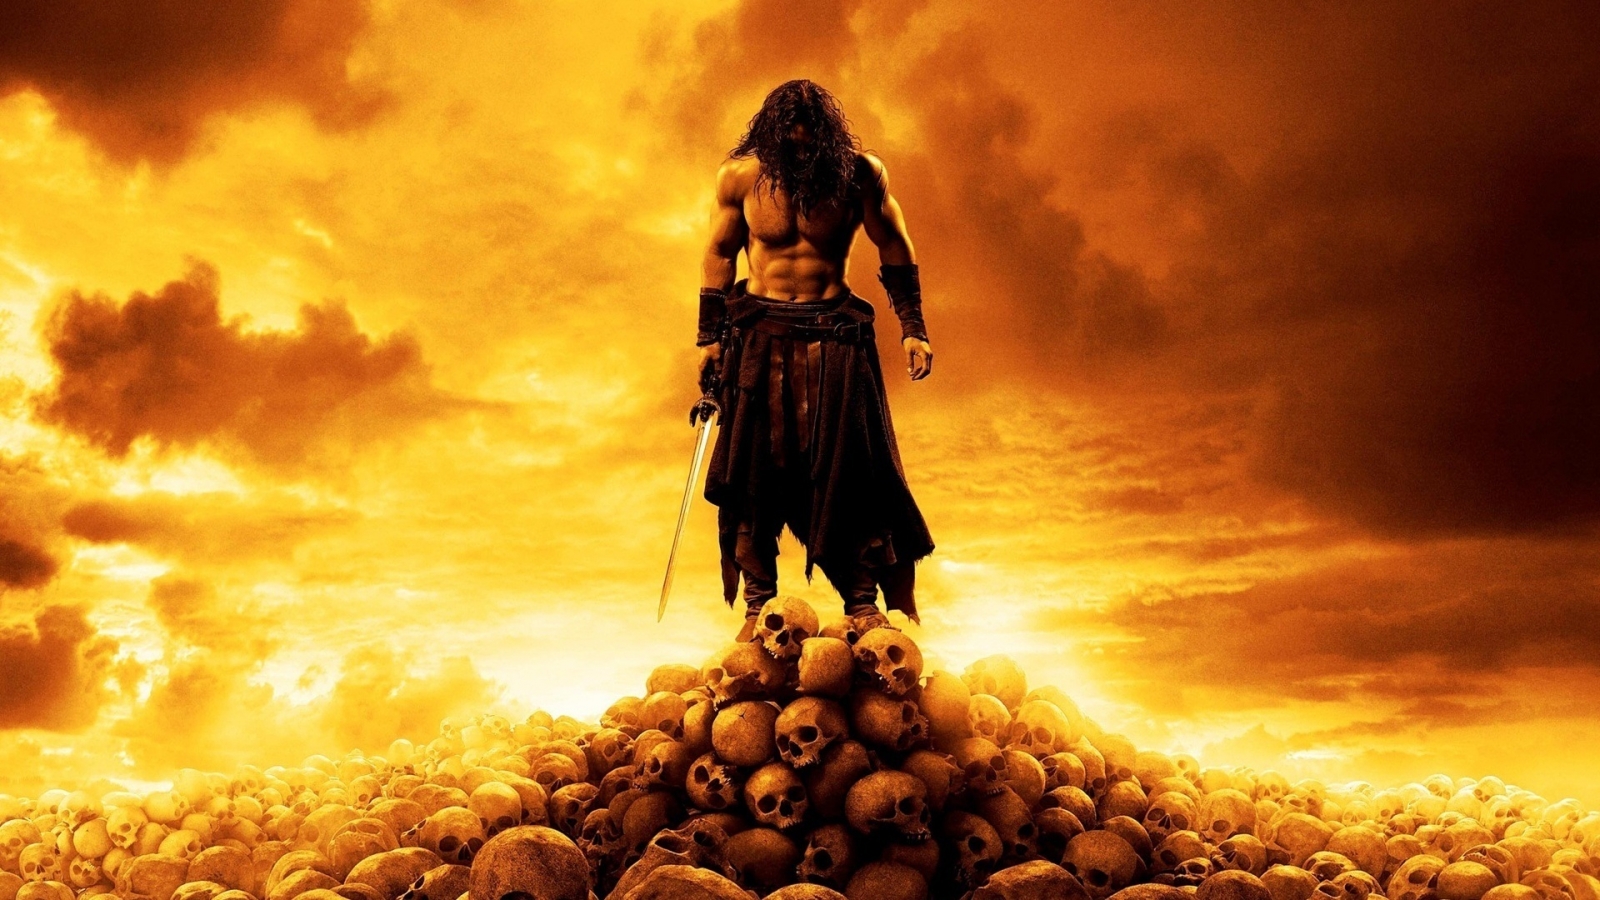 Conan the Barbarian 2011 for 1600 x 900 HDTV resolution